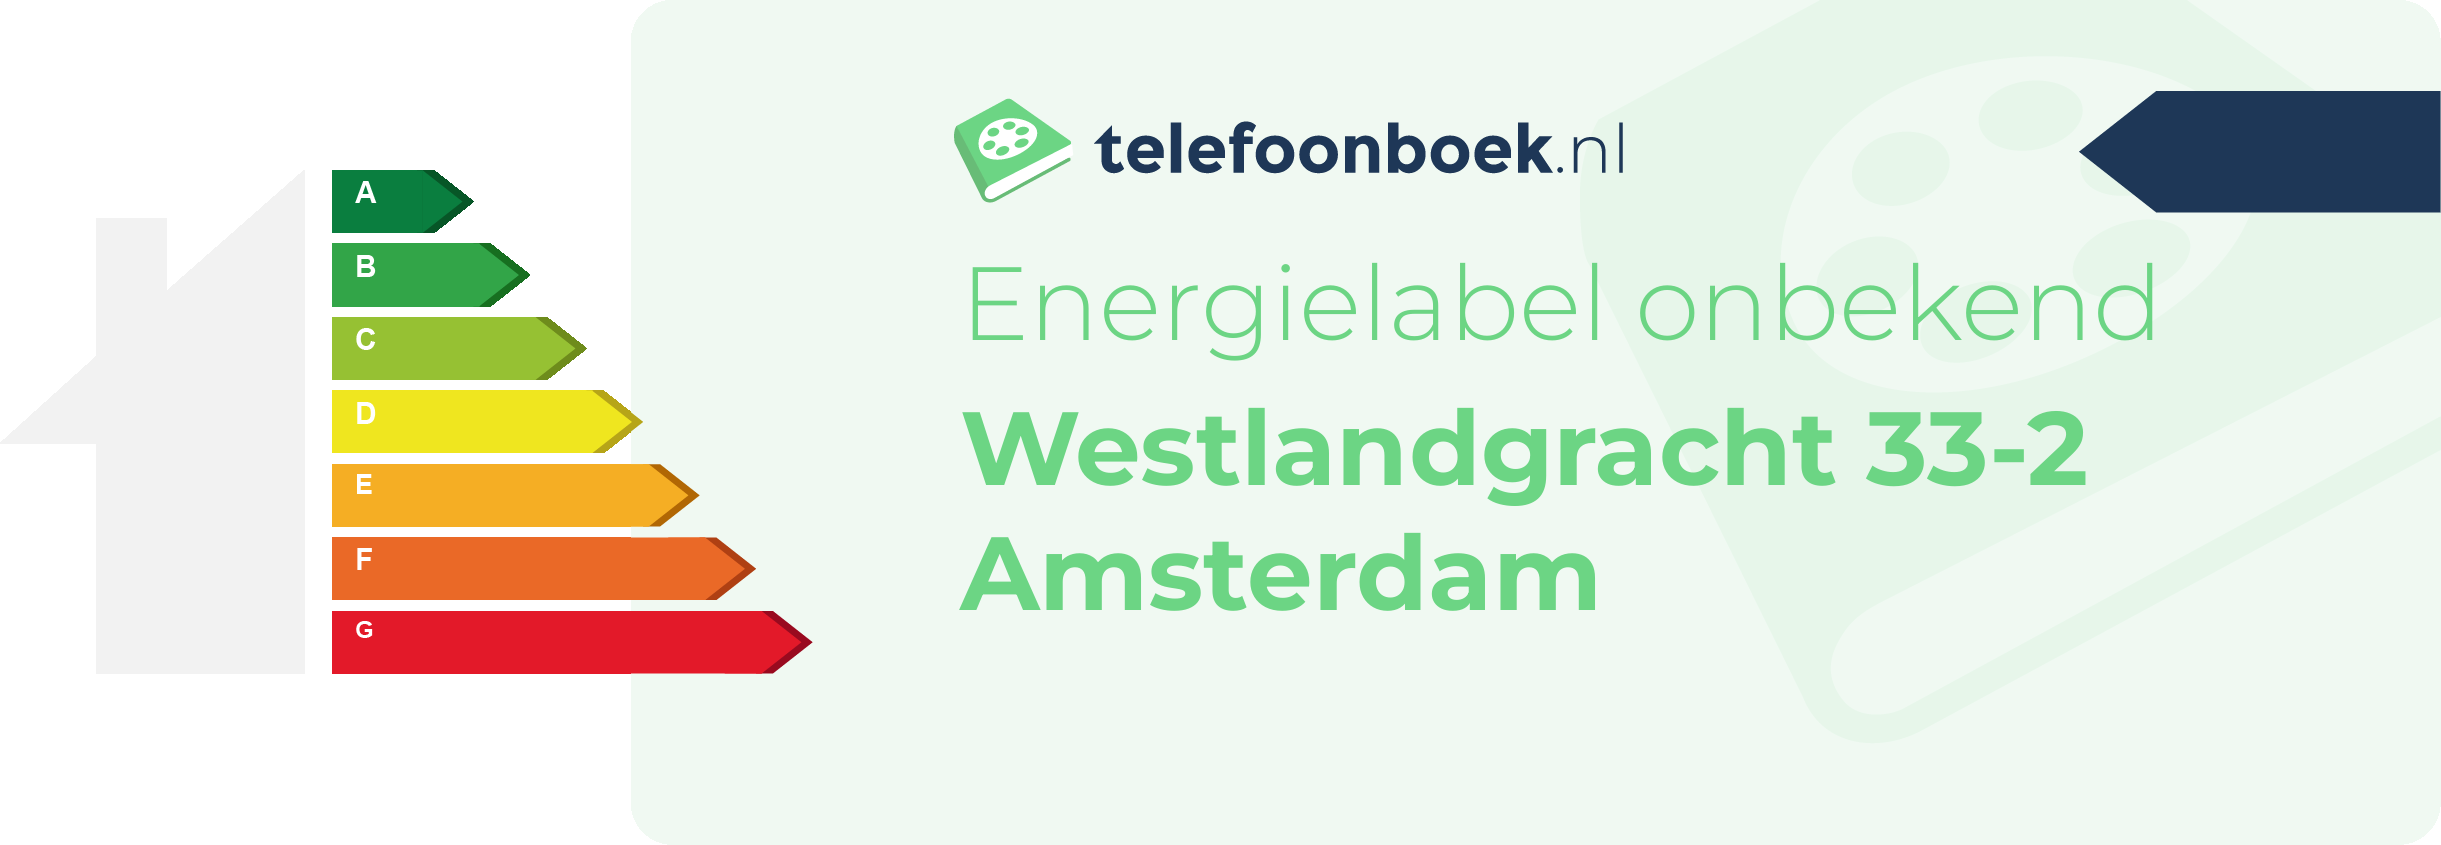 Energielabel Westlandgracht 33-2 Amsterdam